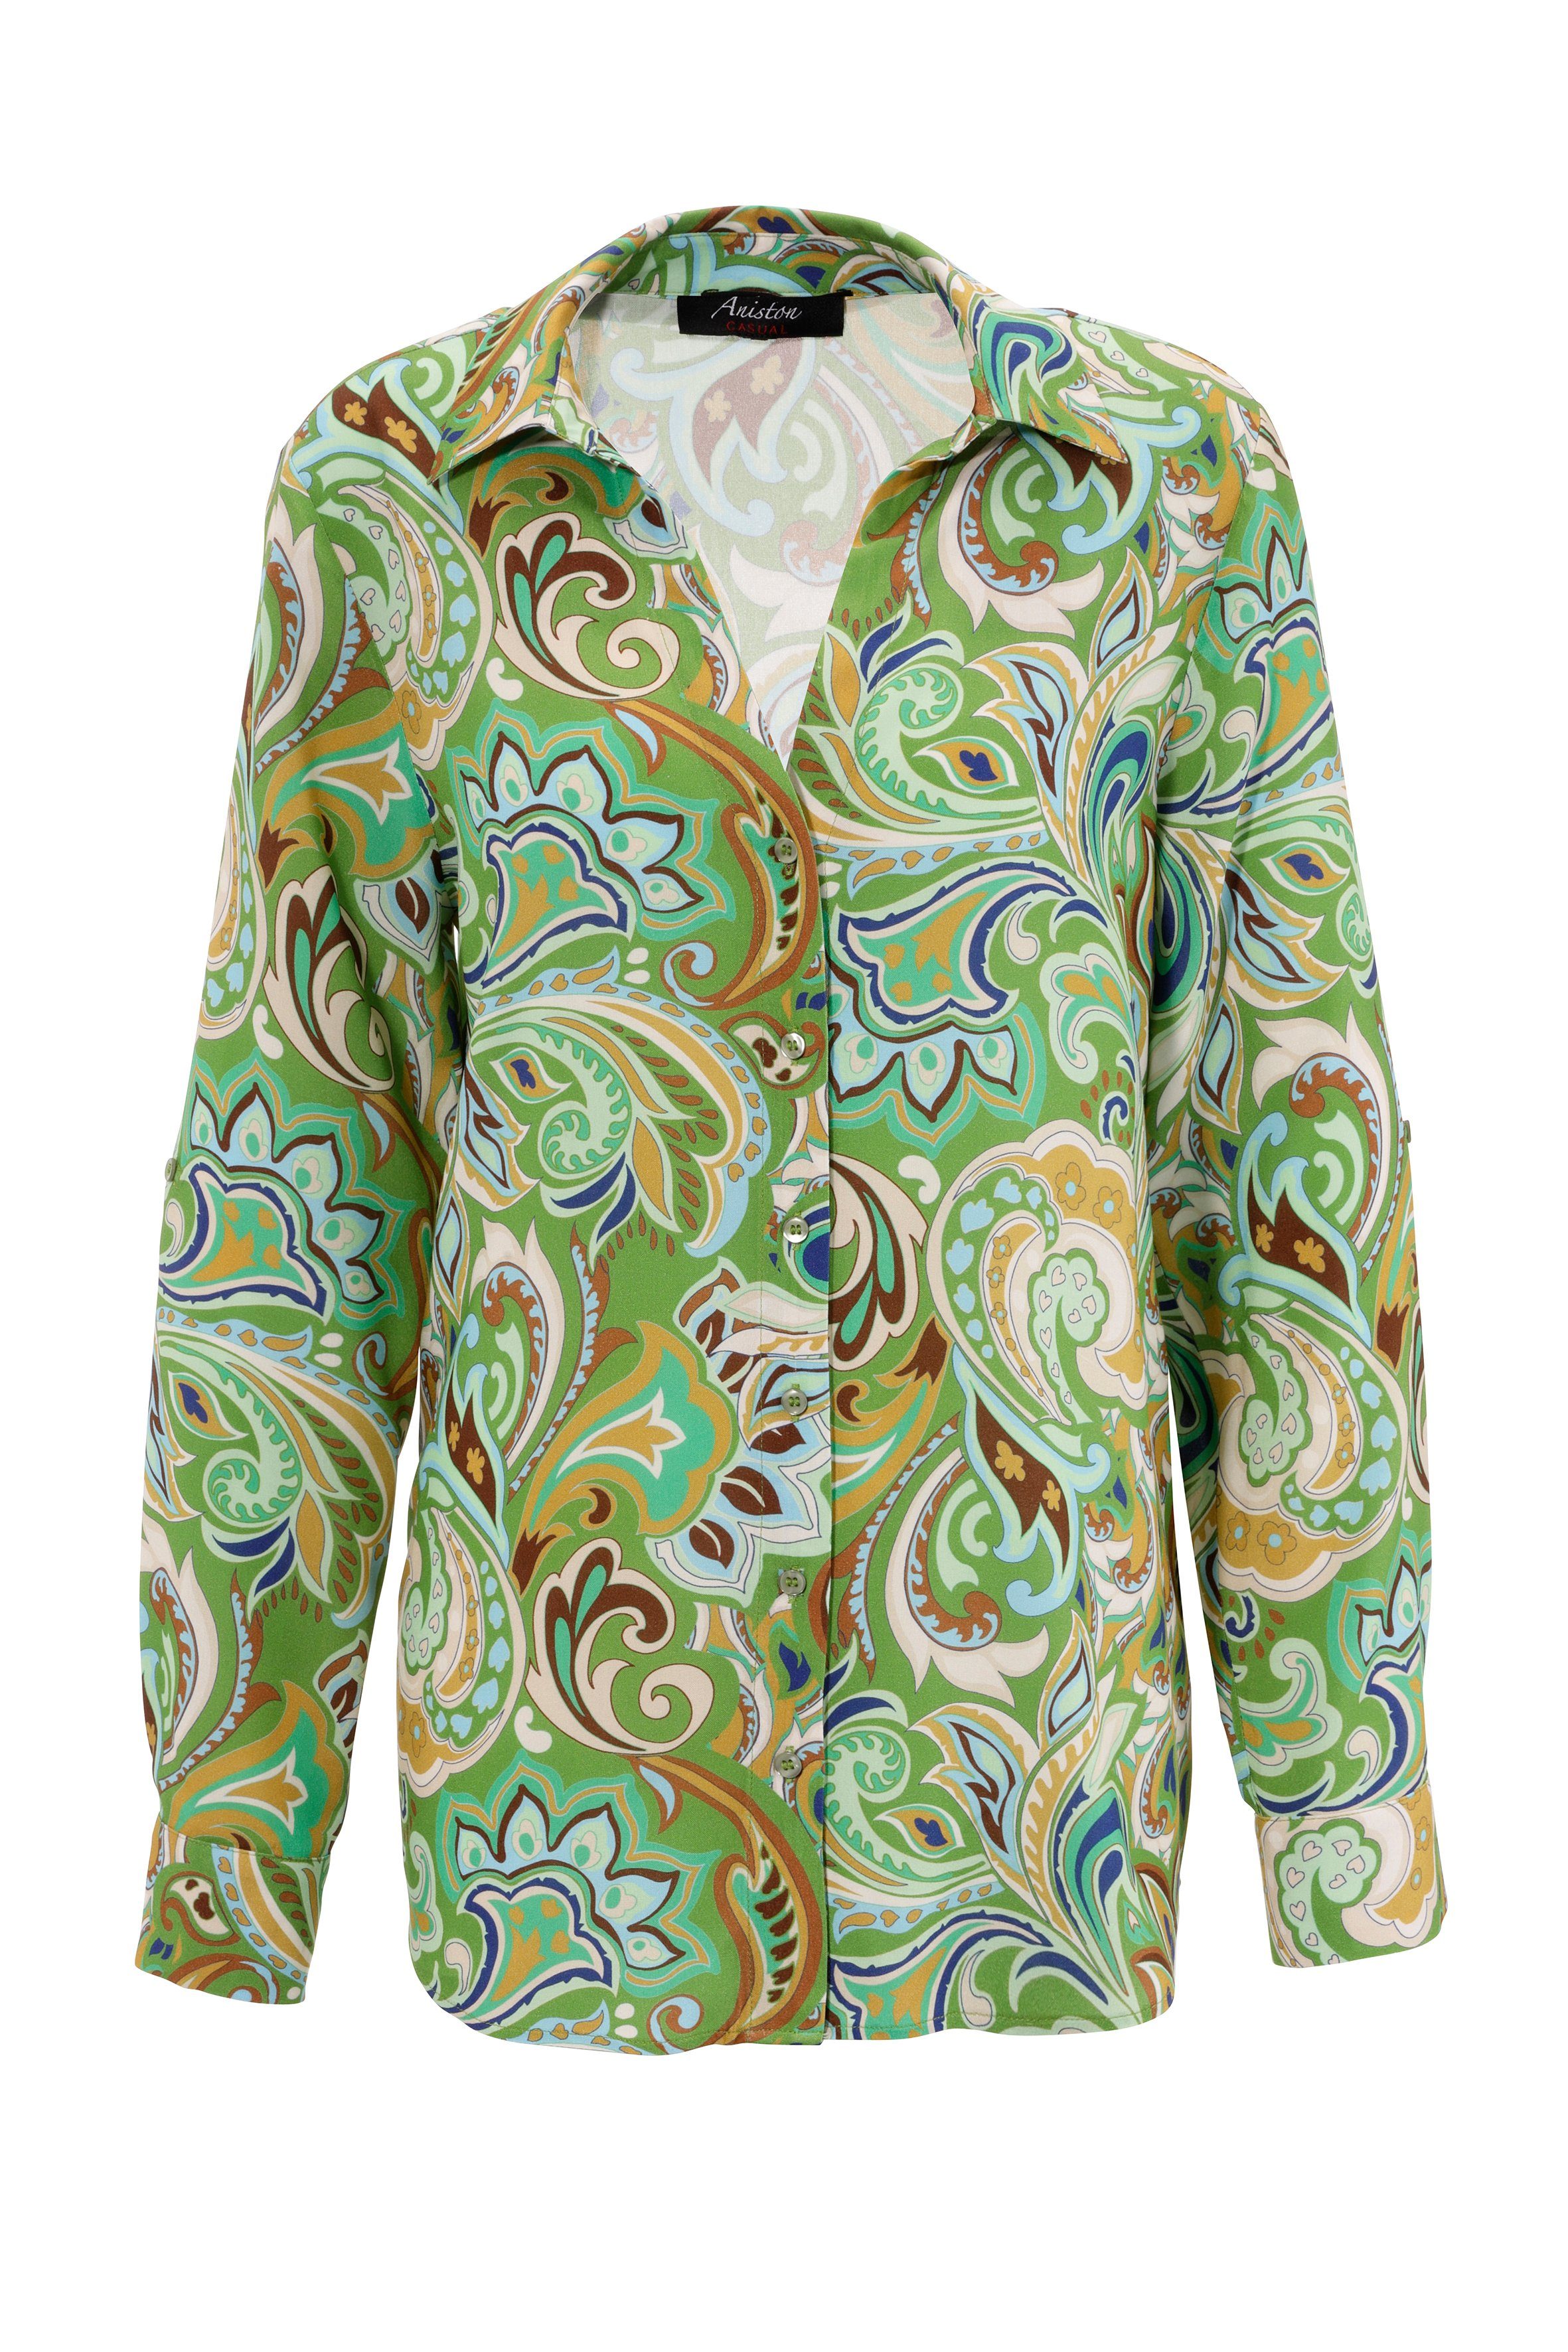 Unikat CASUAL graphische Aniston Paisley-Muster Teil Hemdbluse jedes - ein moosgrünsand-smaragd-royalblau-ocker-hellgrün-hellbeige-türkis-braun-sand-dunkelbraun